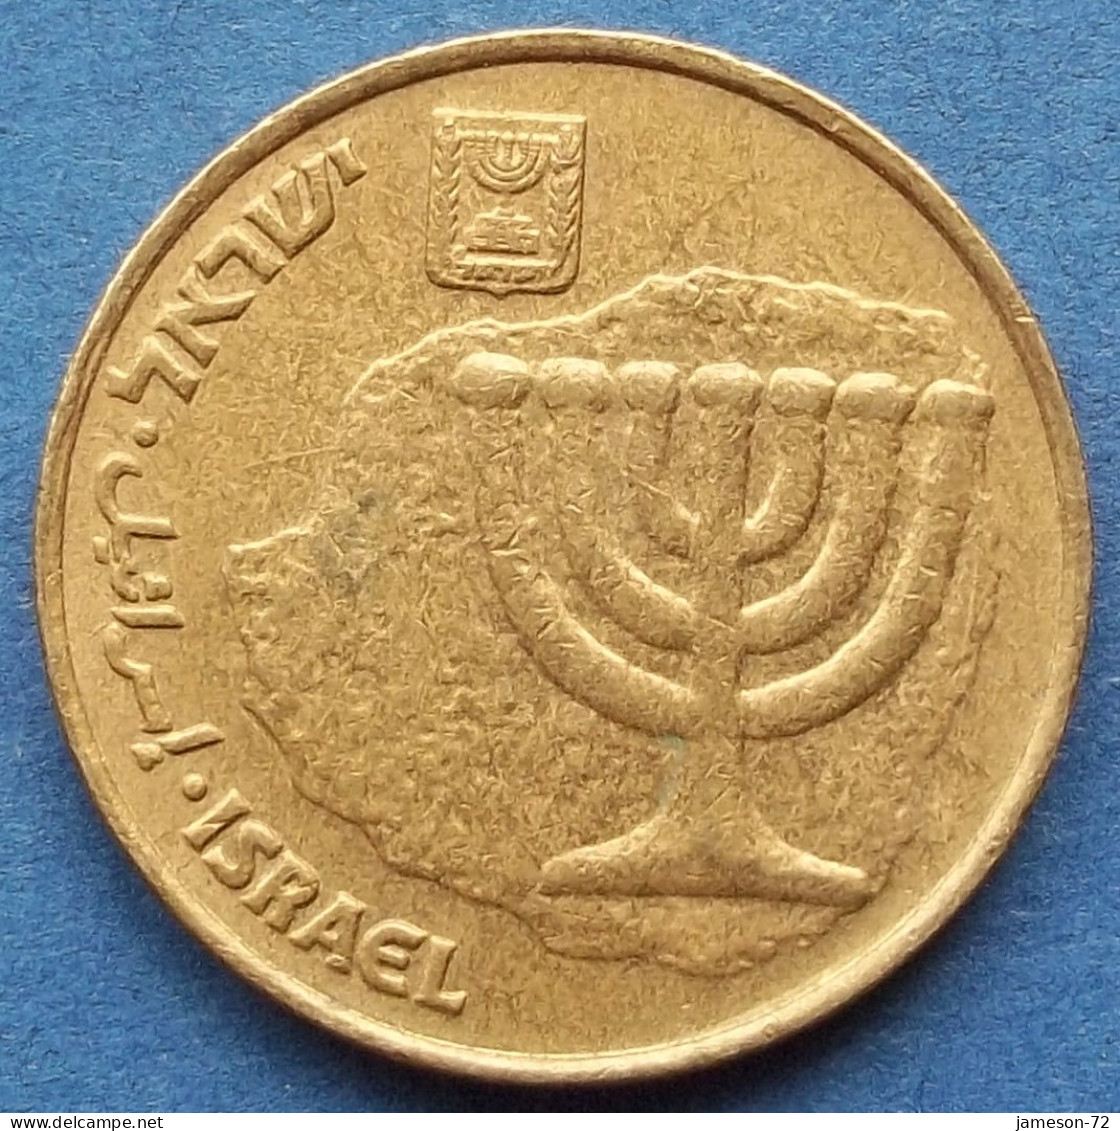 ISRAEL - 10 Agorot JE 5760 (2000AD) "Menorah" KM# 158 Monetary Reform (1985) - Edelweiss Coins - Israël